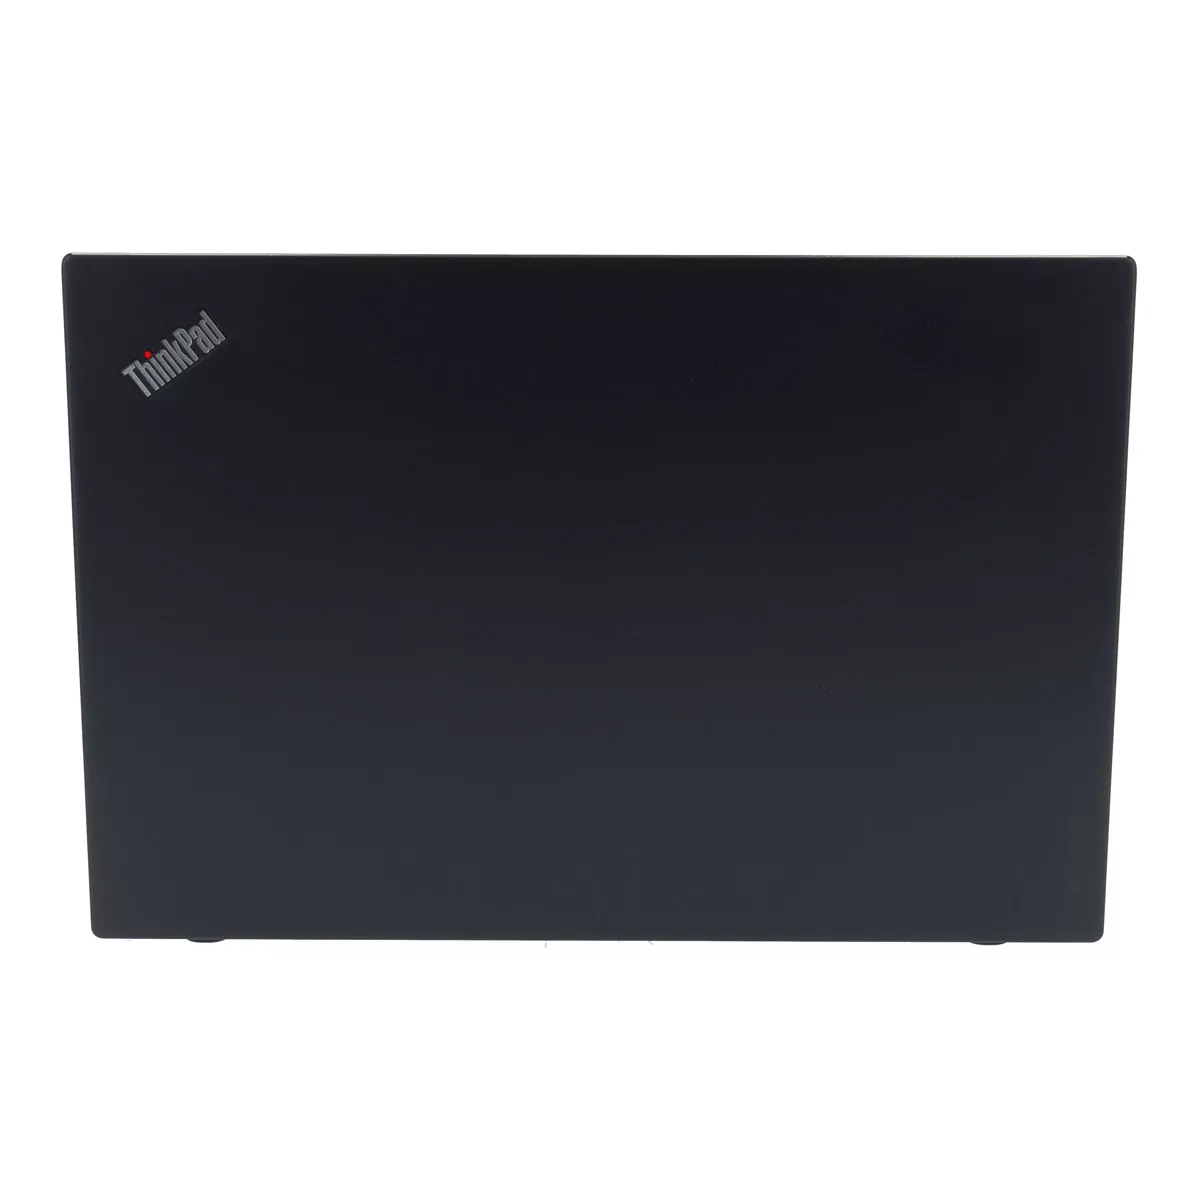 Lenovo ThinkPad T470s Core i5 7200U Full-HD 240 GB M.2 SSD Webcam B